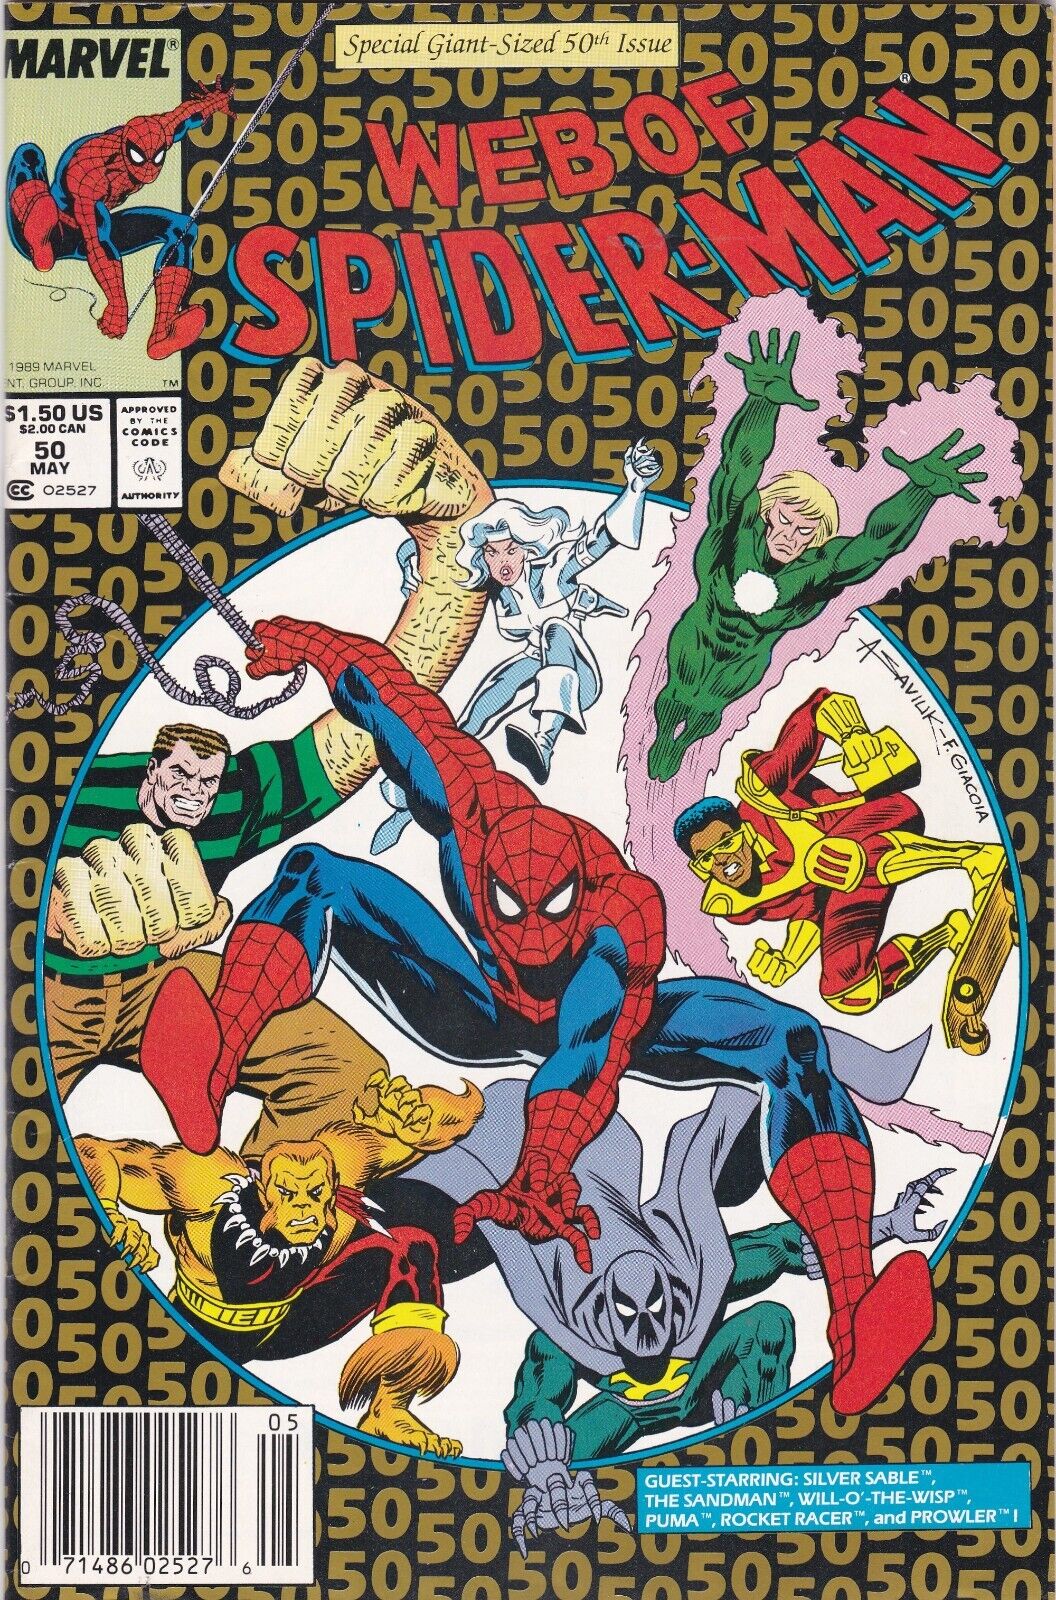 WEB OF SPIDER-MAN  # 50  HOMAGE  SPIDER-MAN 300 COVER MARVEL COMIC BOOK 1989